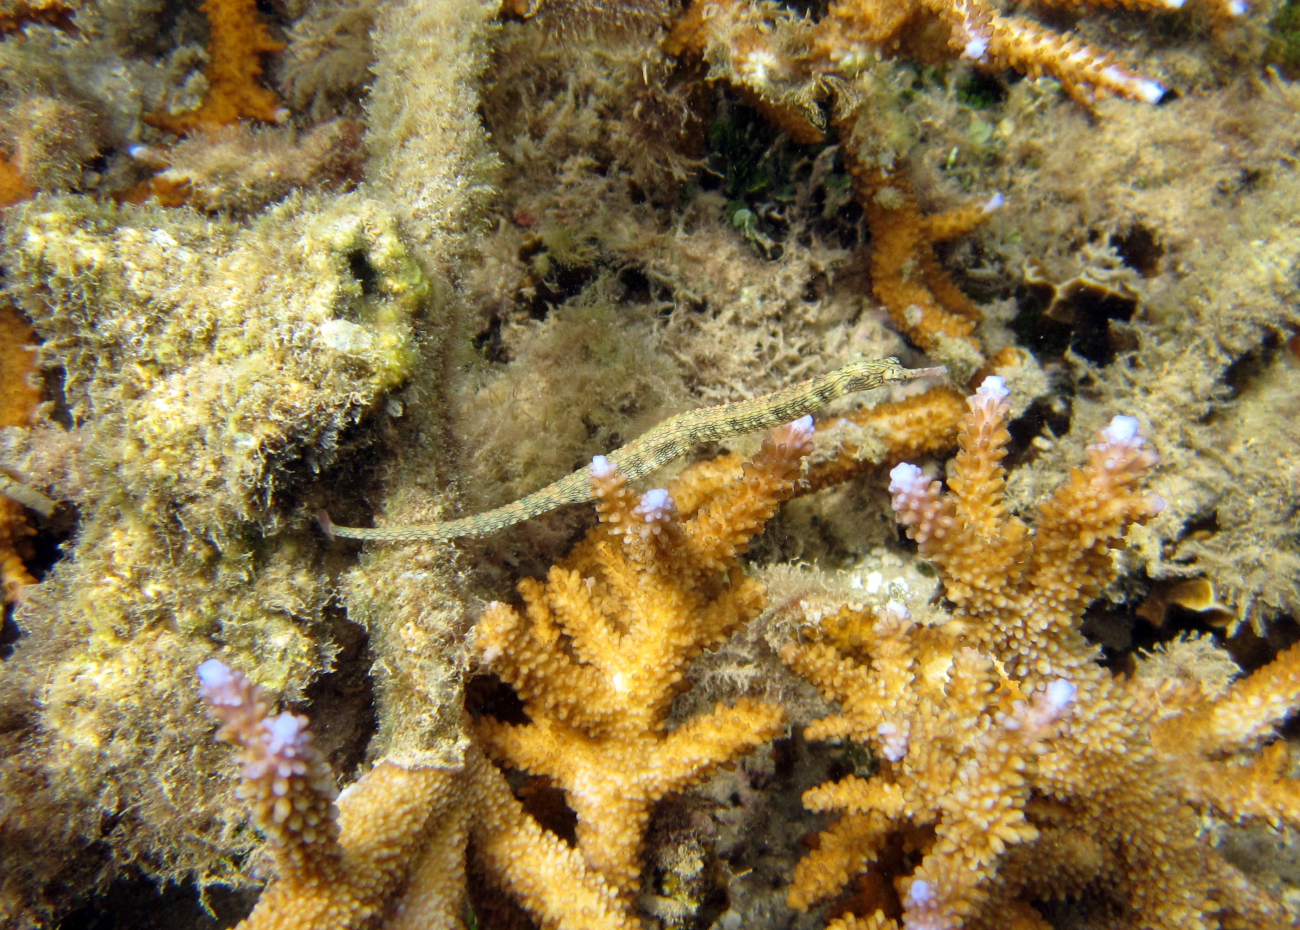 Reeftop pipefish (Corythoichthys haematopterus)